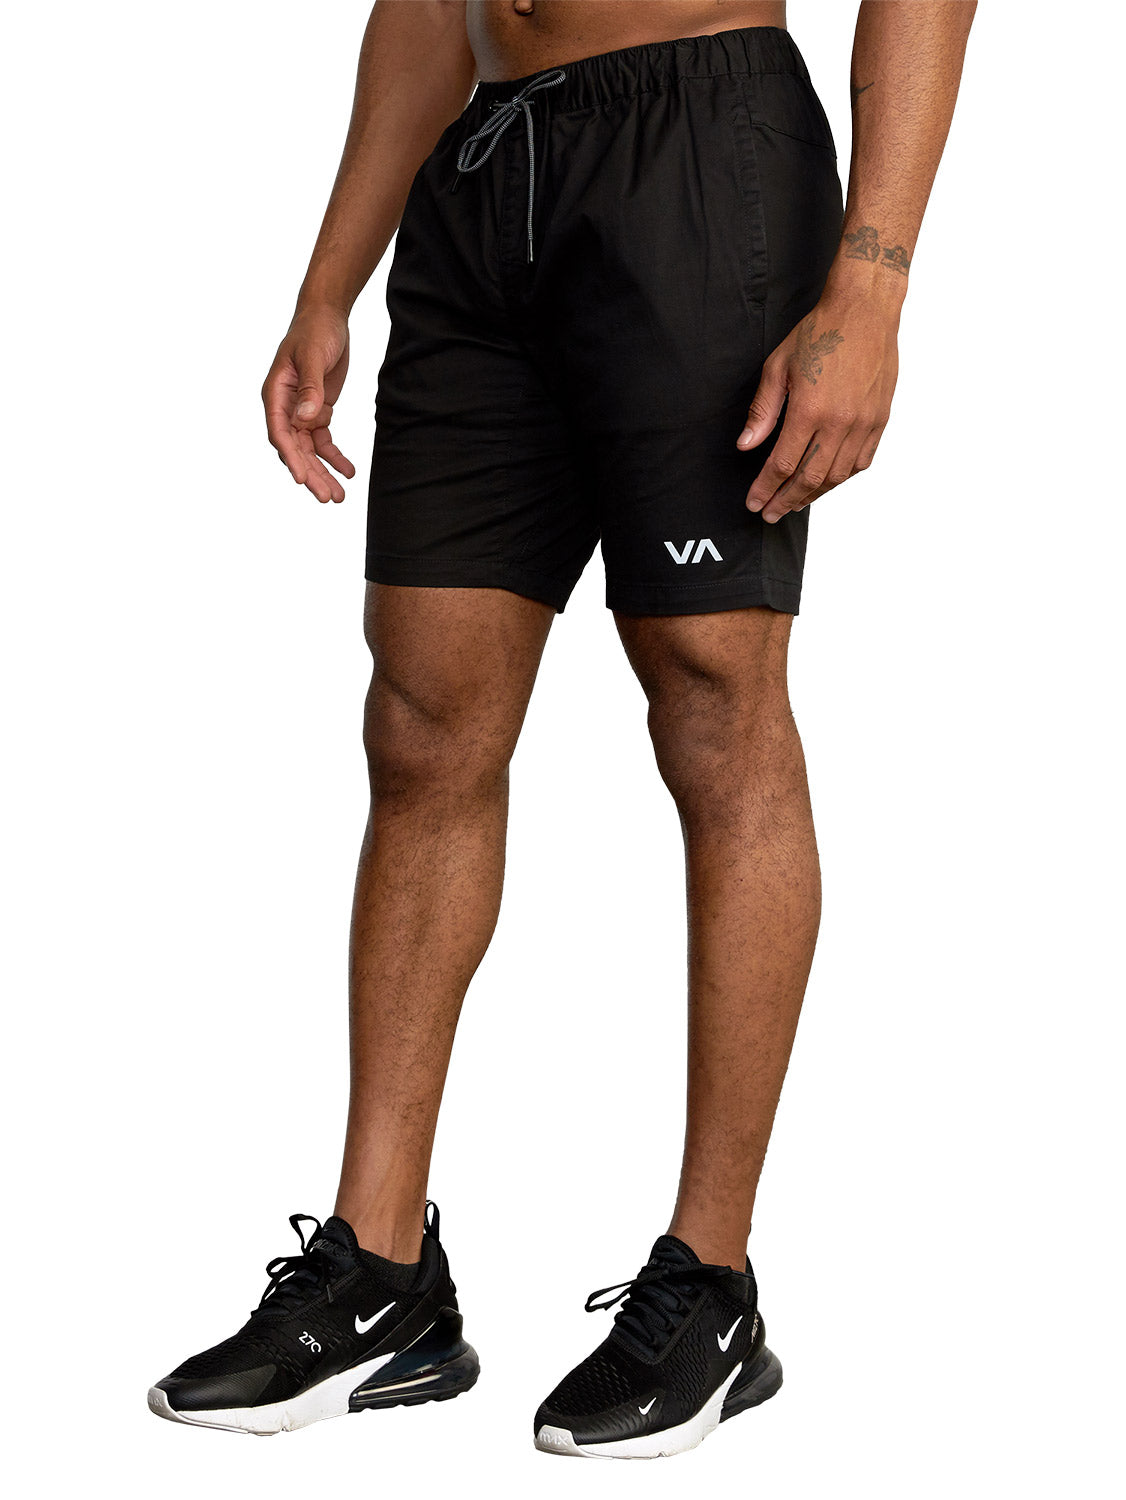 RVCA Men's Spectrum Shorts